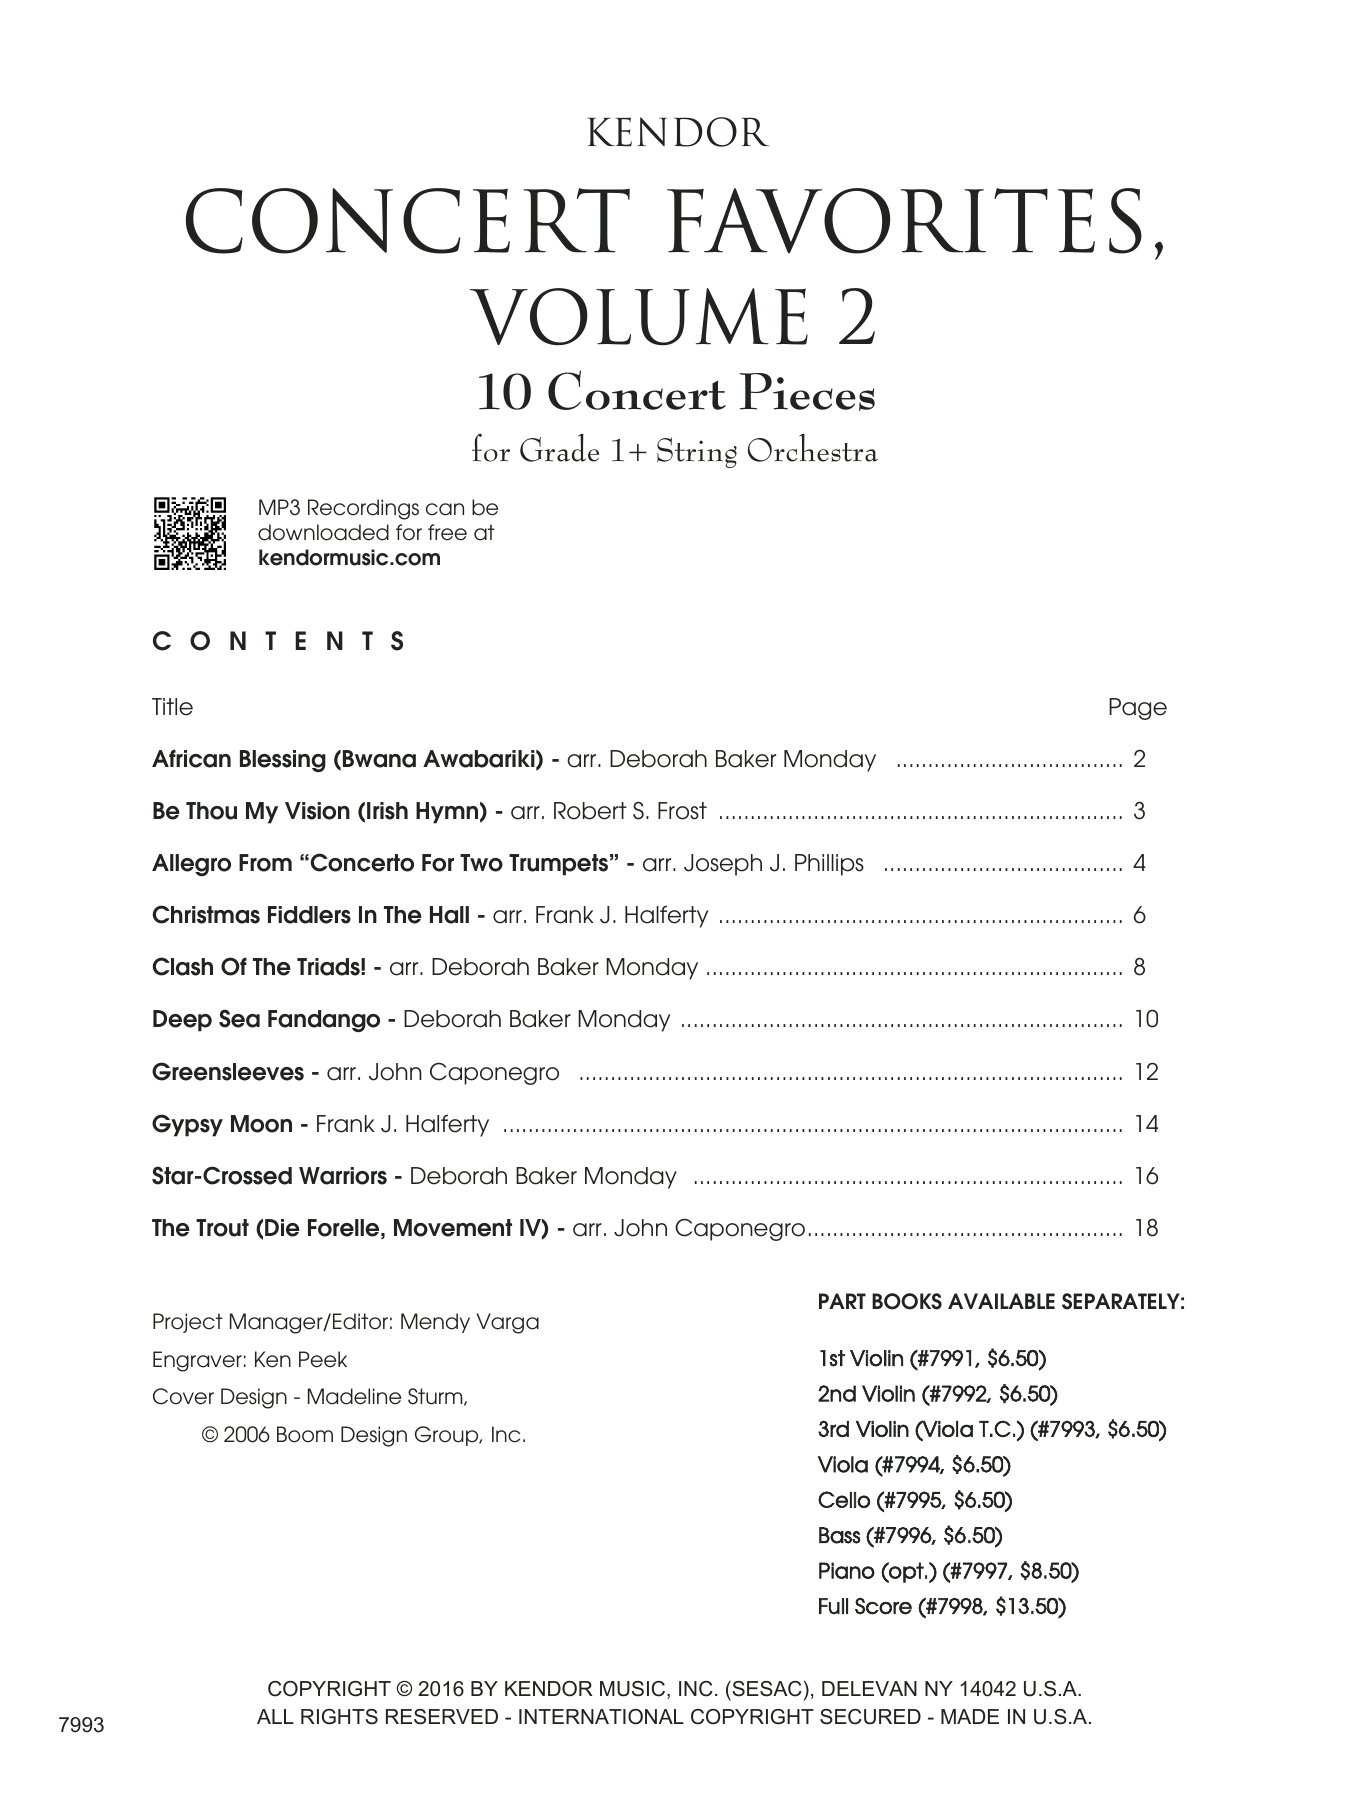 Download Various Kendor Concert Favorites, Volume 2 - 3r Sheet Music